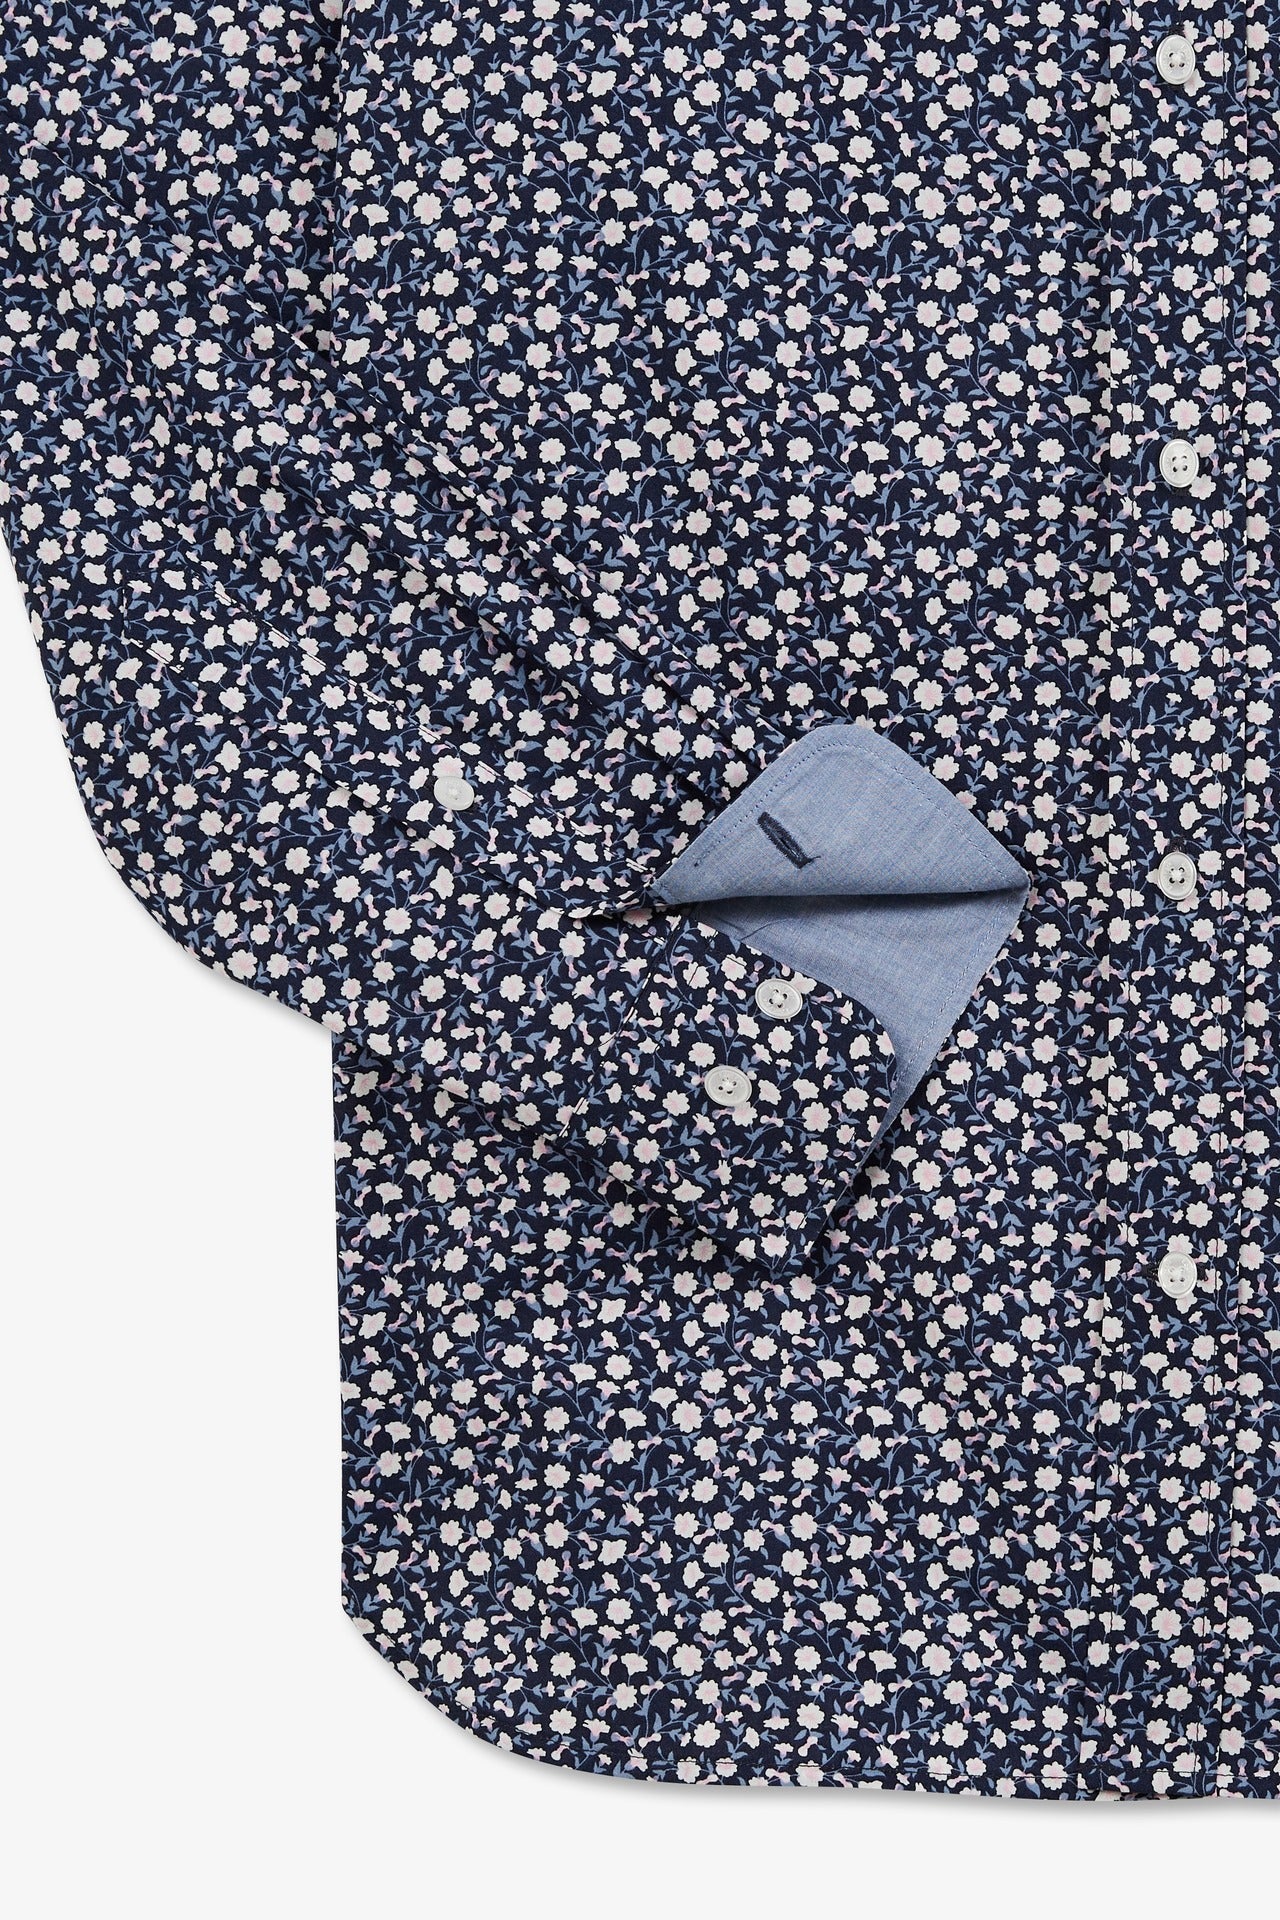 Chemise bleu marine à micro motif fleuri